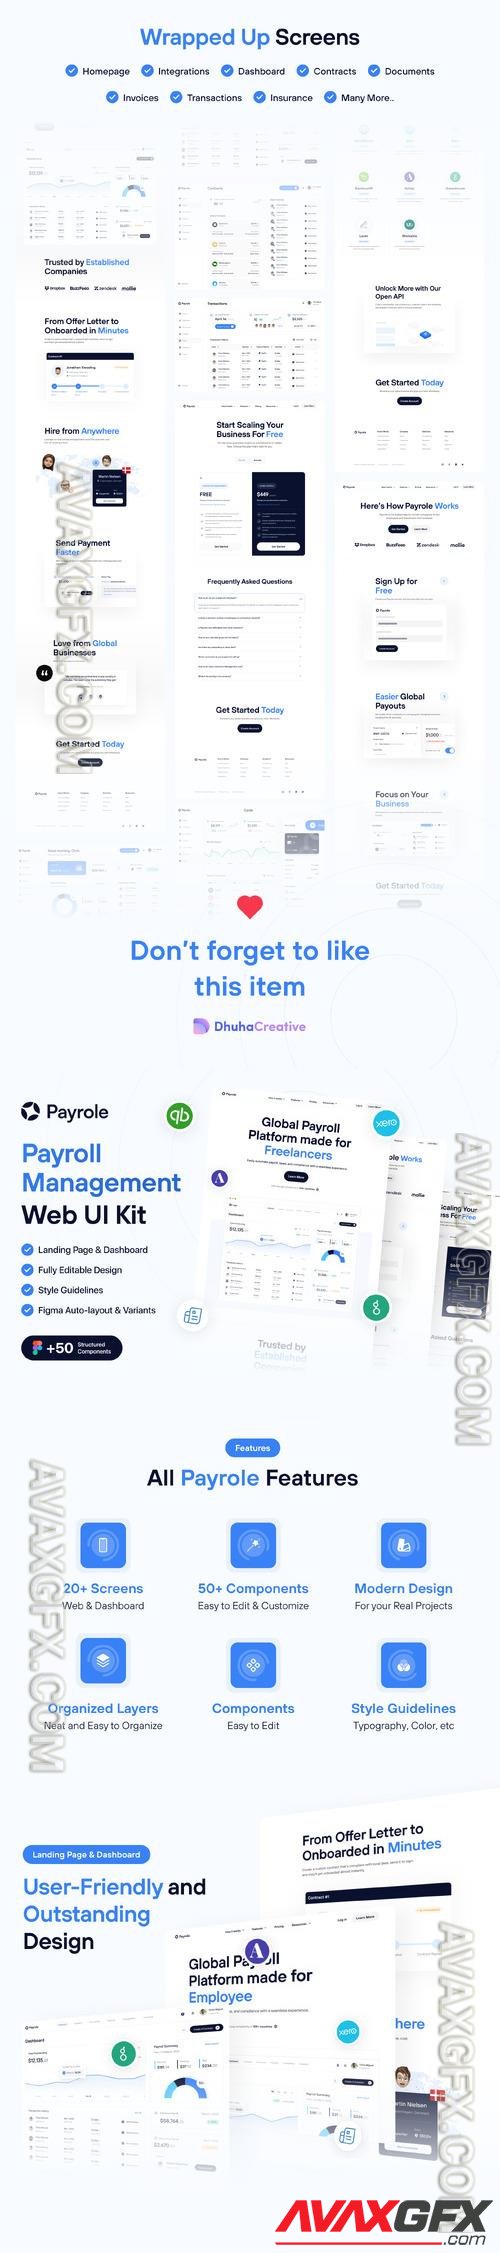 Payrole - Payroll Management Web UI Kit